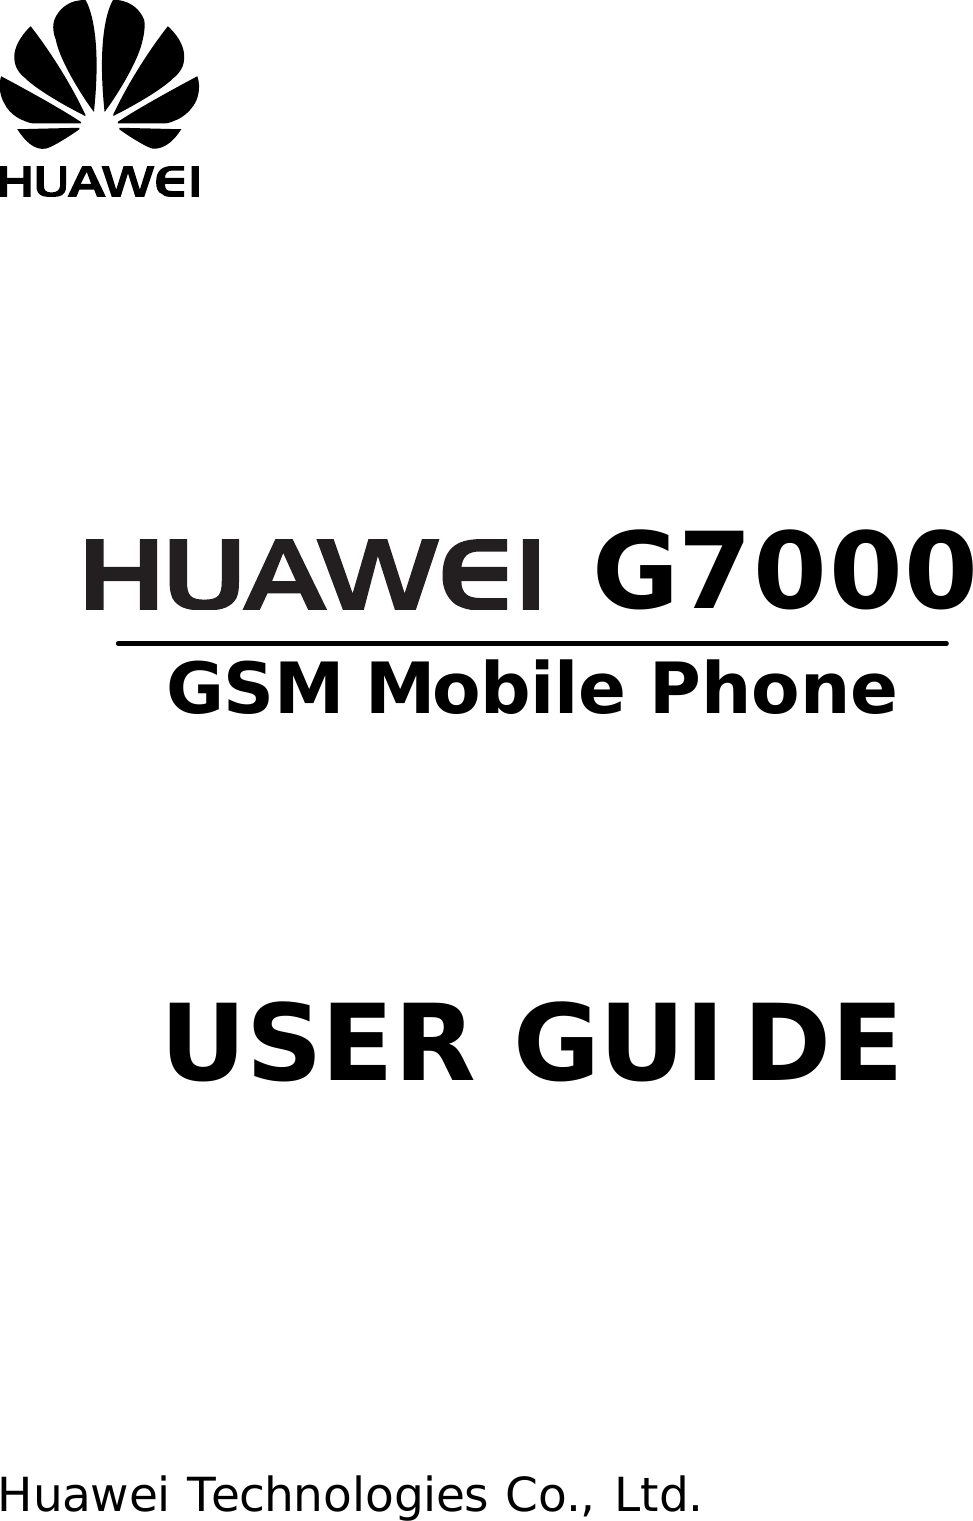        G7000 GSM Mobile Phone     USER GUIDE       Huawei Technologies Co., Ltd. 